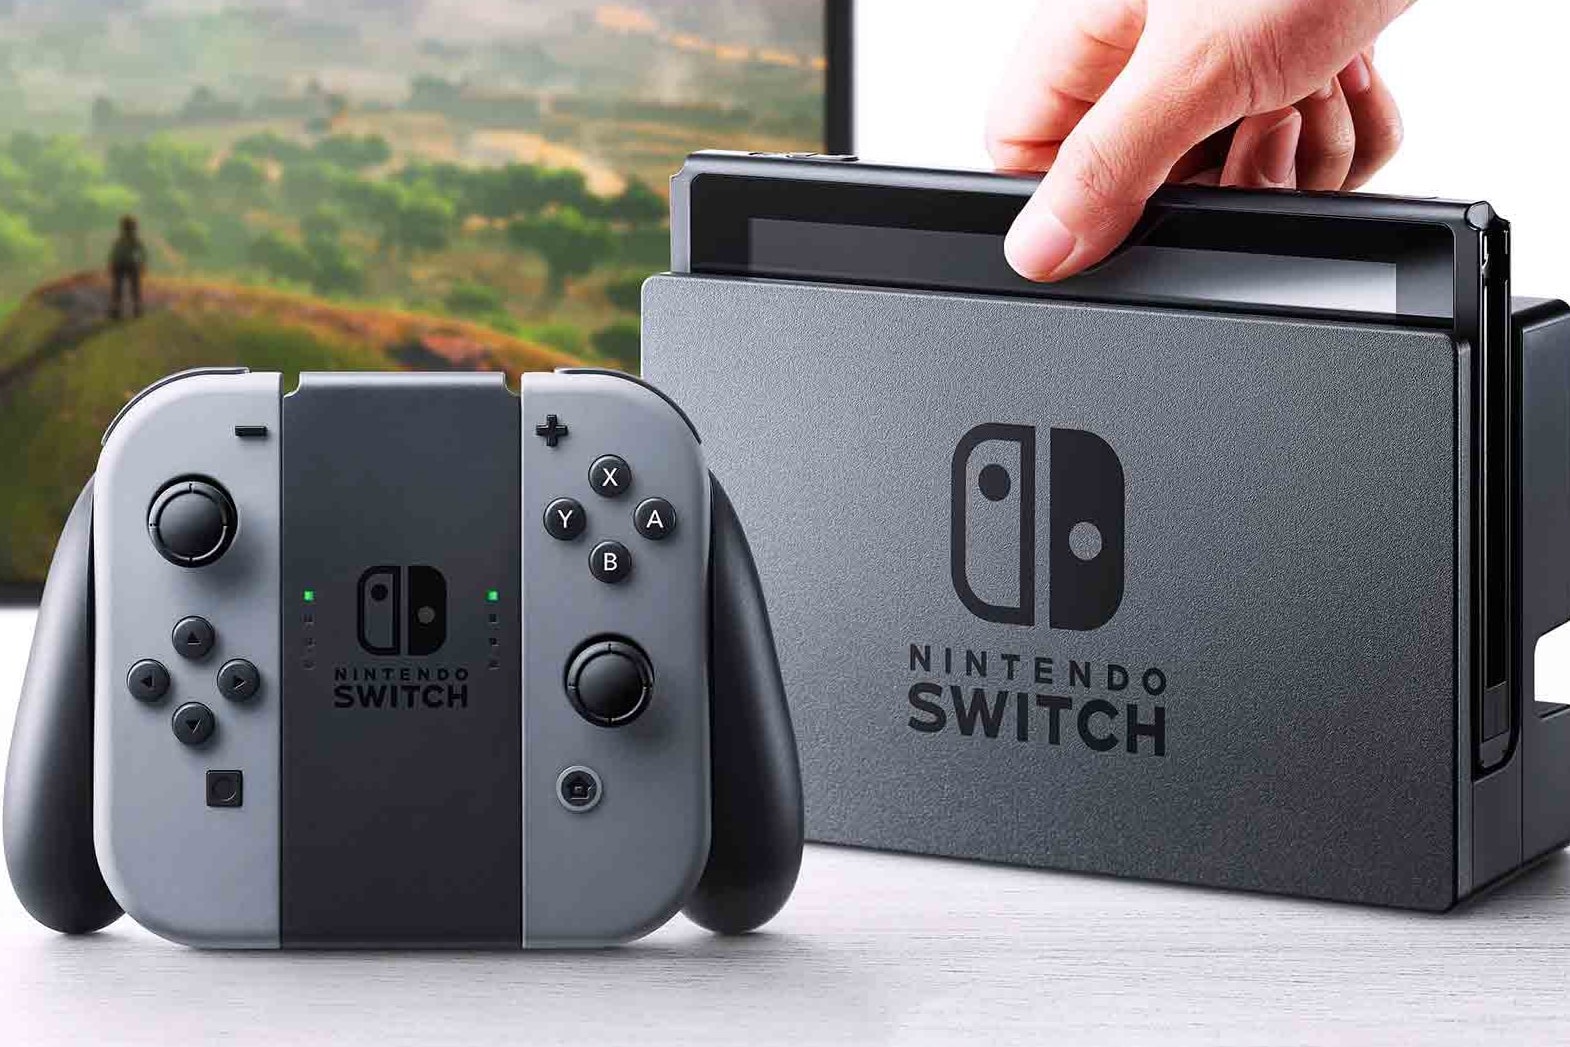 Nintendo Switch Passes Lifetime Sales Wii U 10 Months Super Mario Odyssey Mario Kart 8 Deluxe